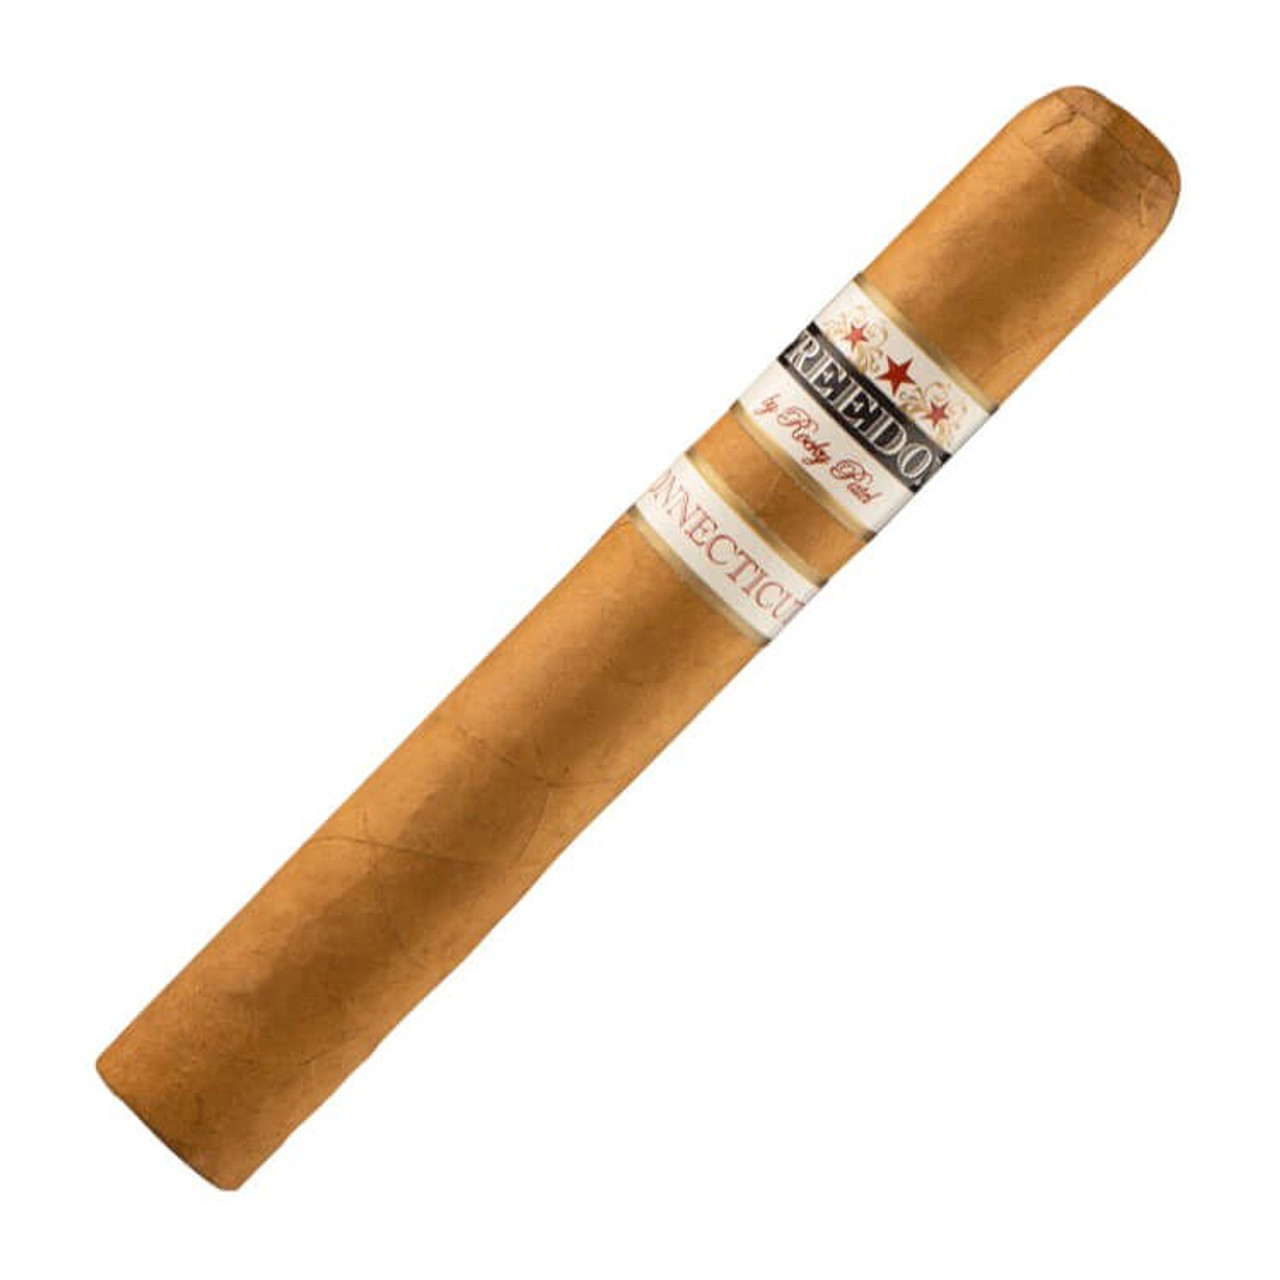 Rocky Patel Freedom Connecticut Robusto Cigars - 5.5 x 50 Single